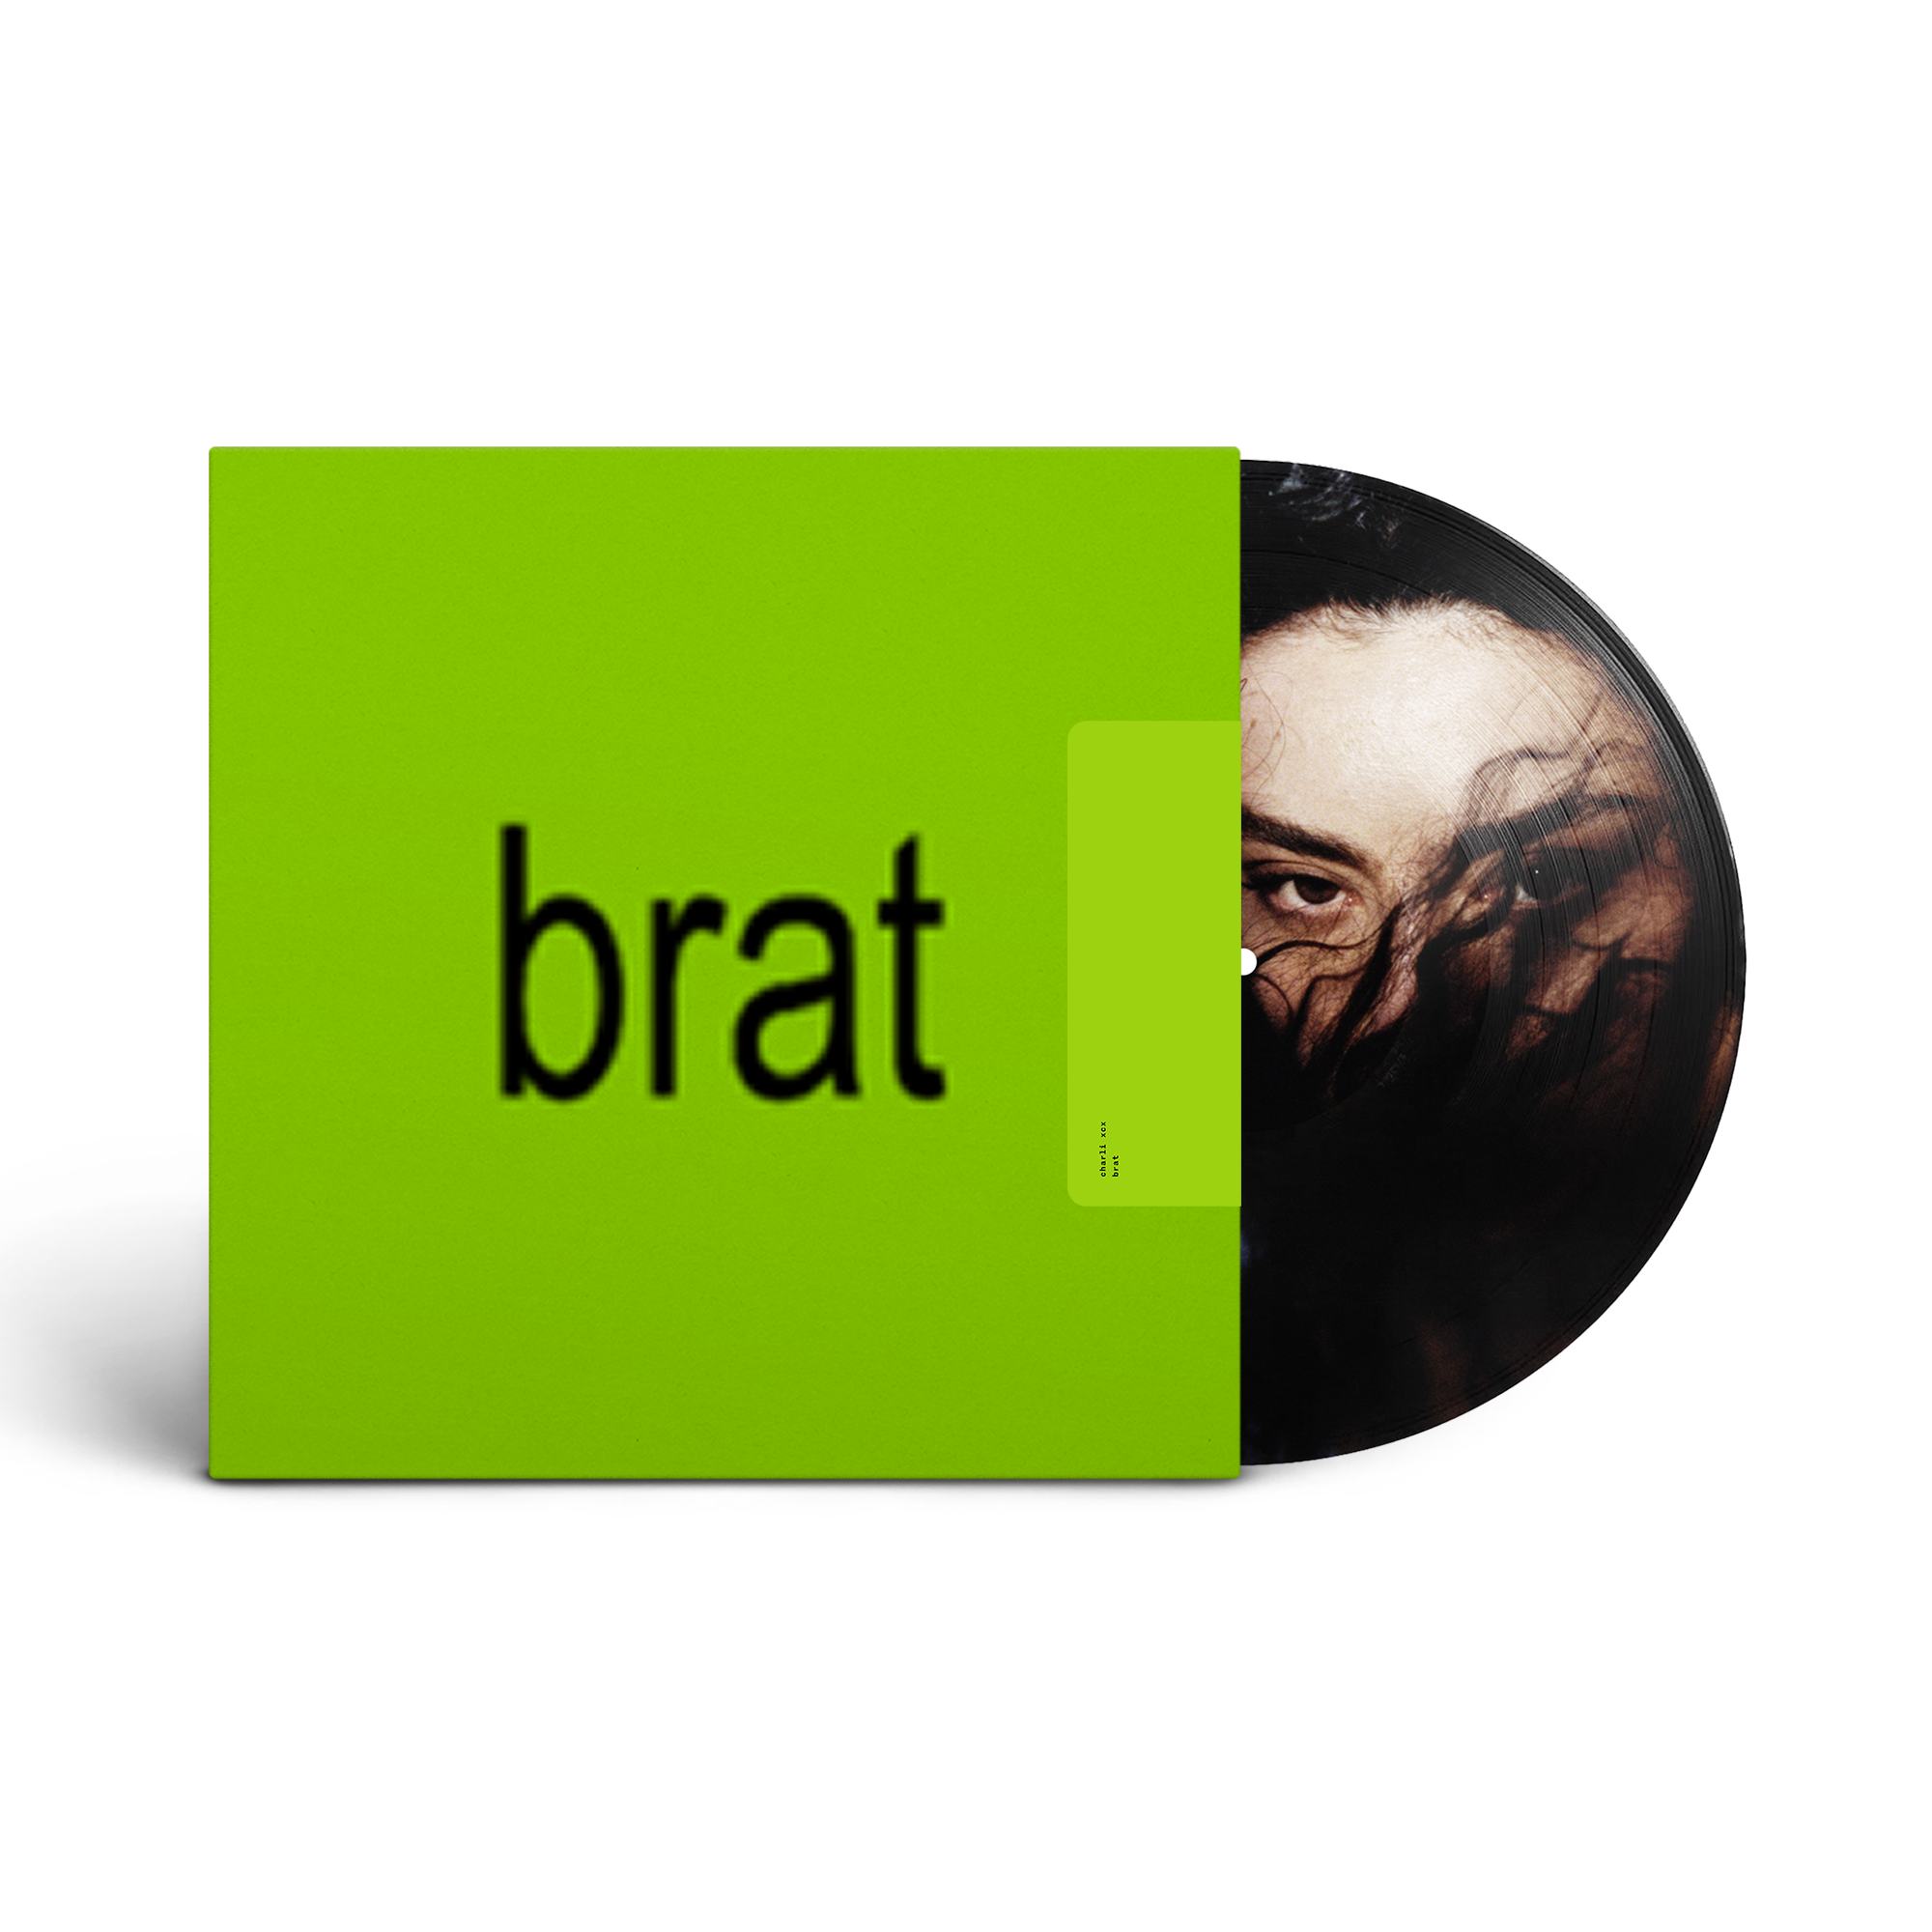 BRAT (360_brat exclusive vinyl)